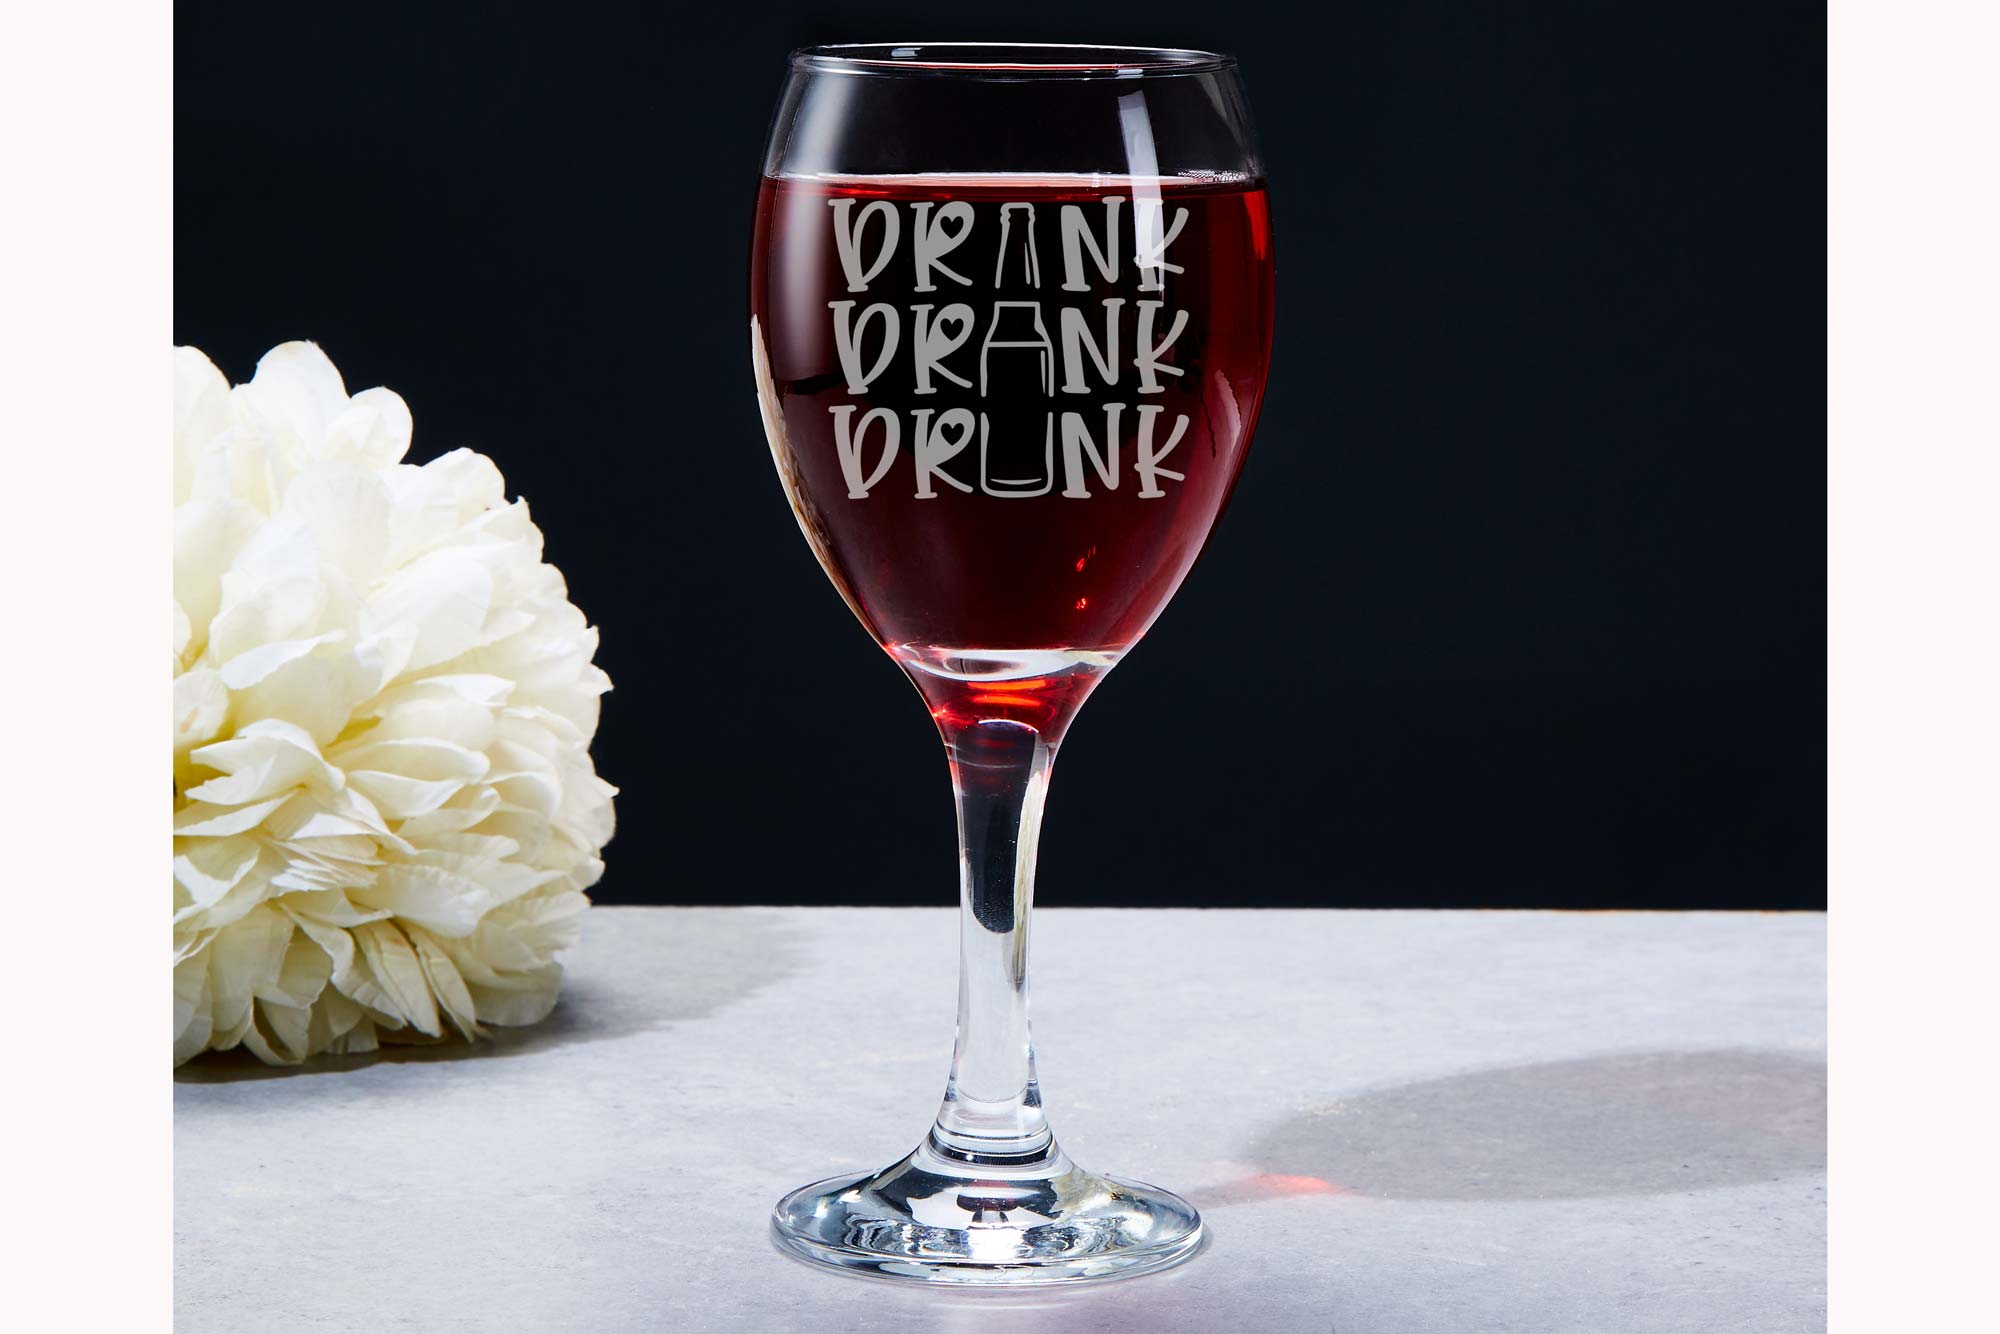 Drink Drank Drunk Wine Glass